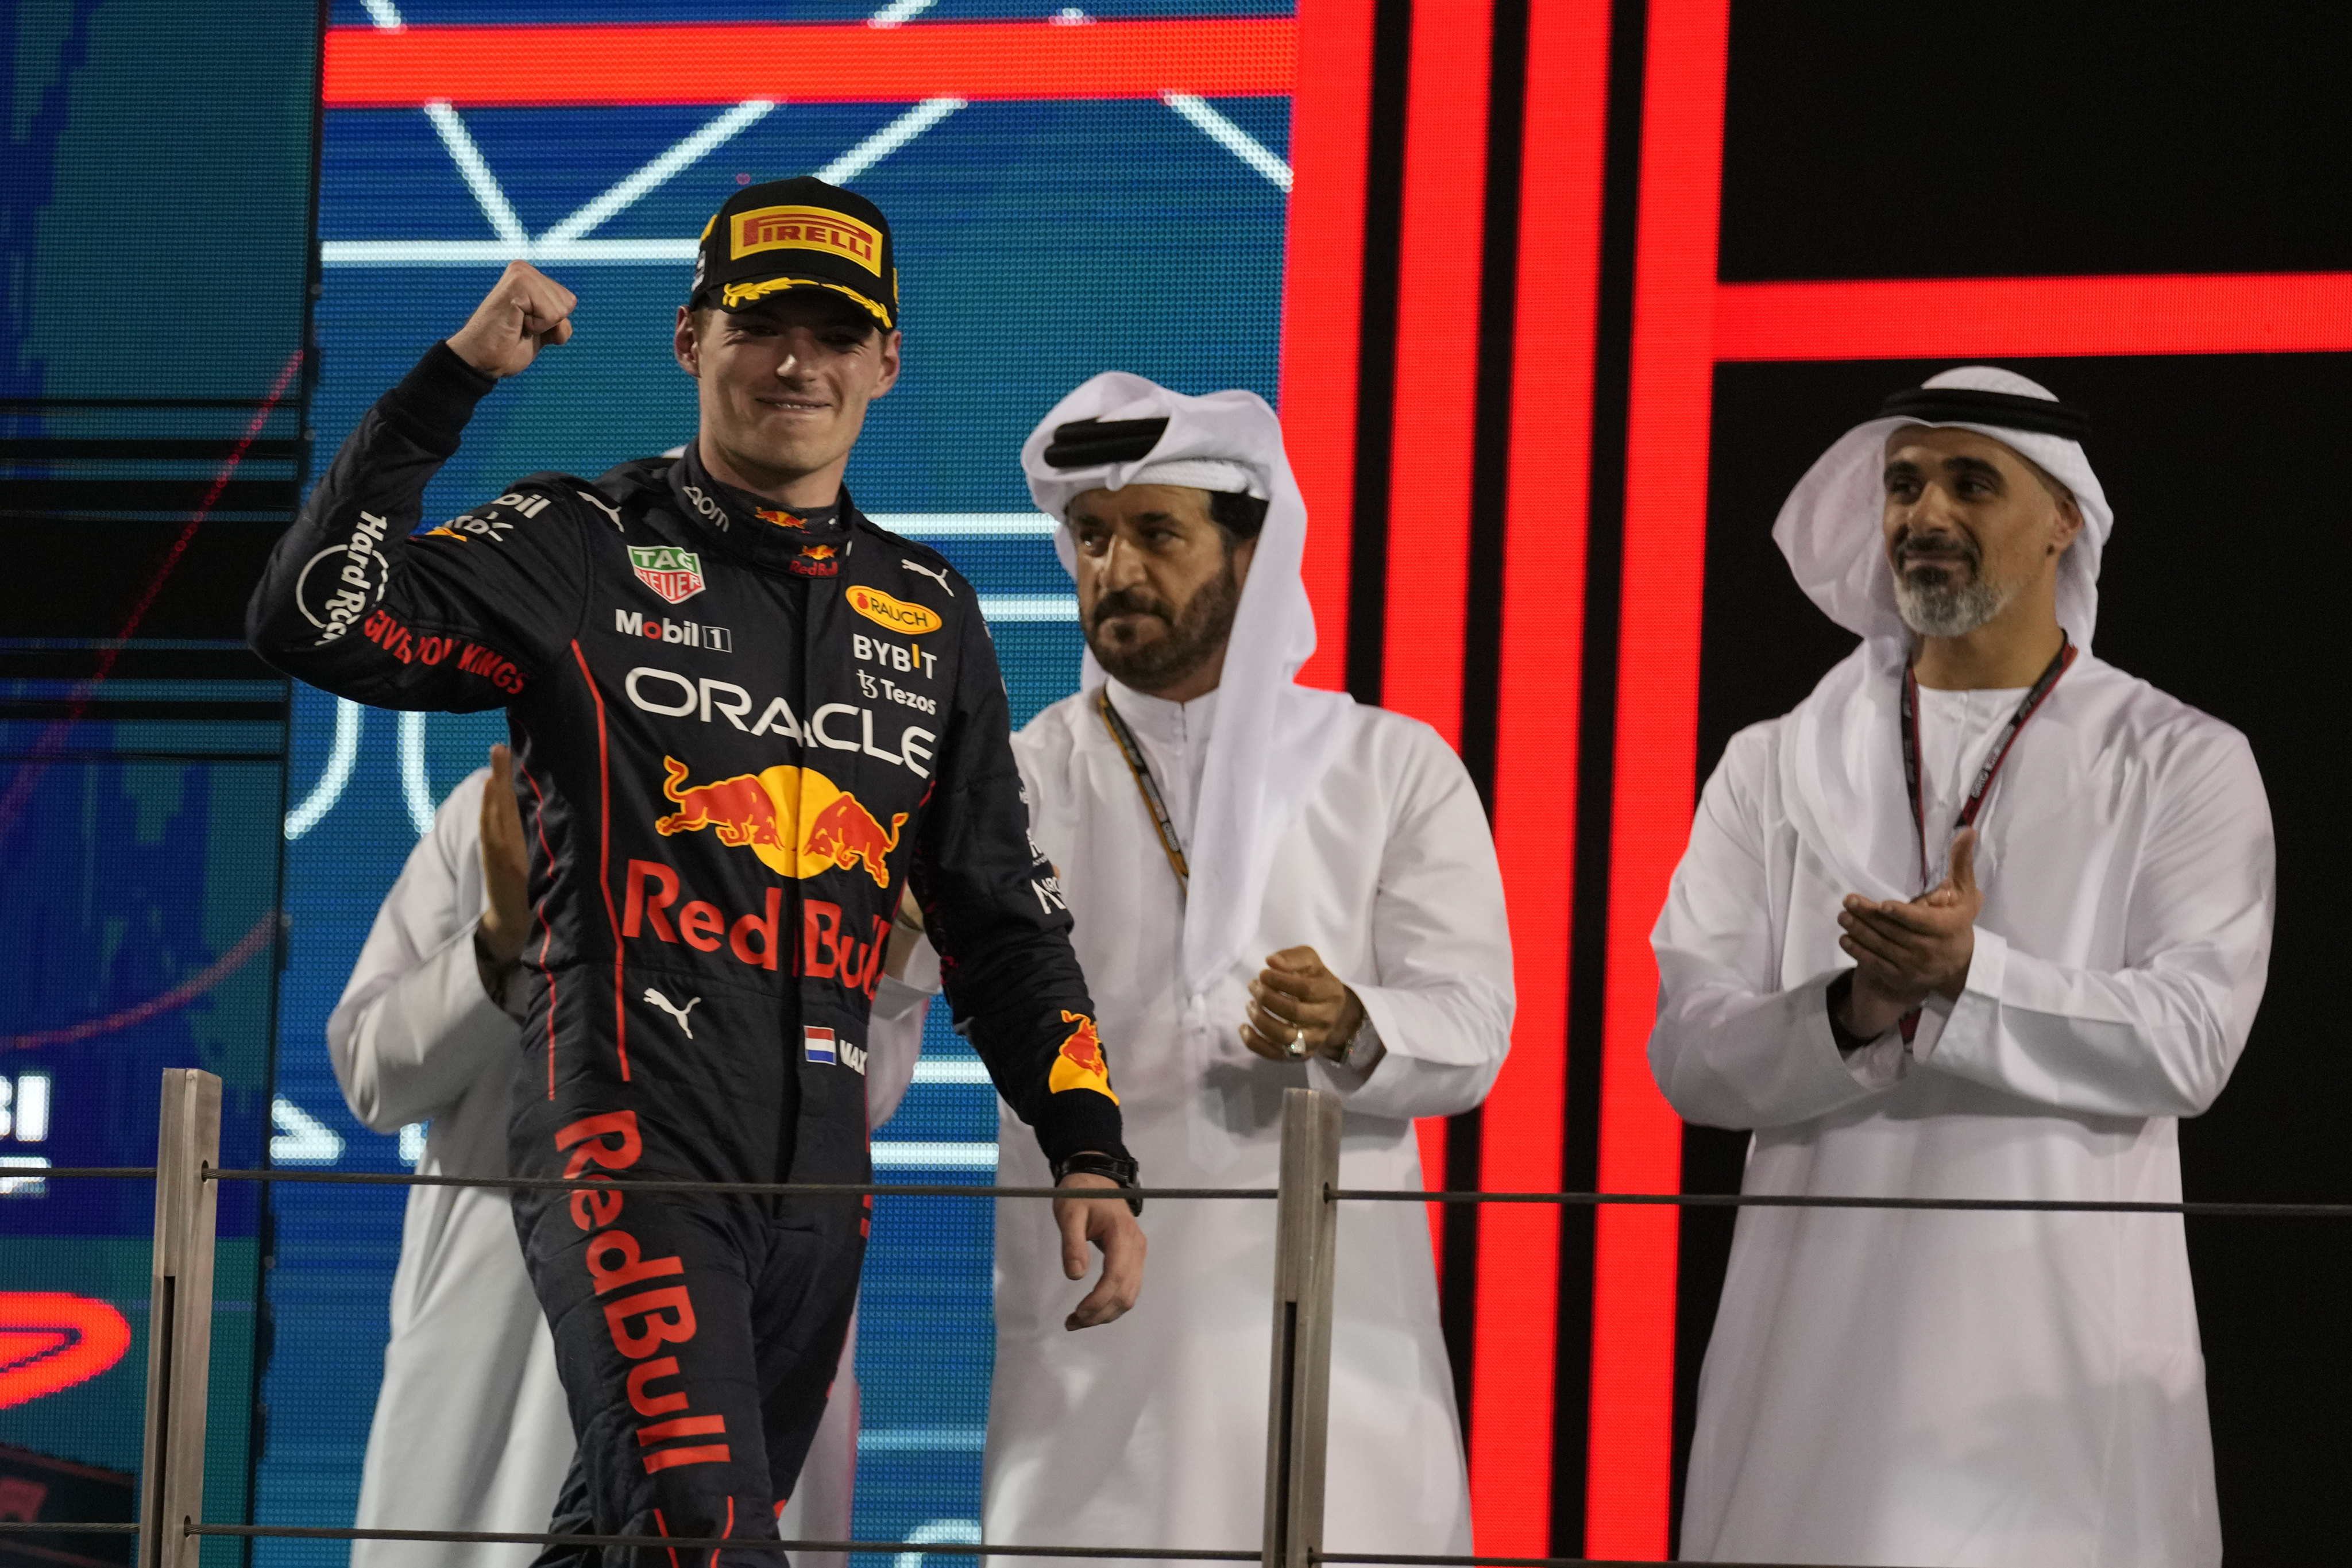 Red Bull’s Max Verstappen celebrates after winning the Abu Dhabi Grand Prix. Photo: AP